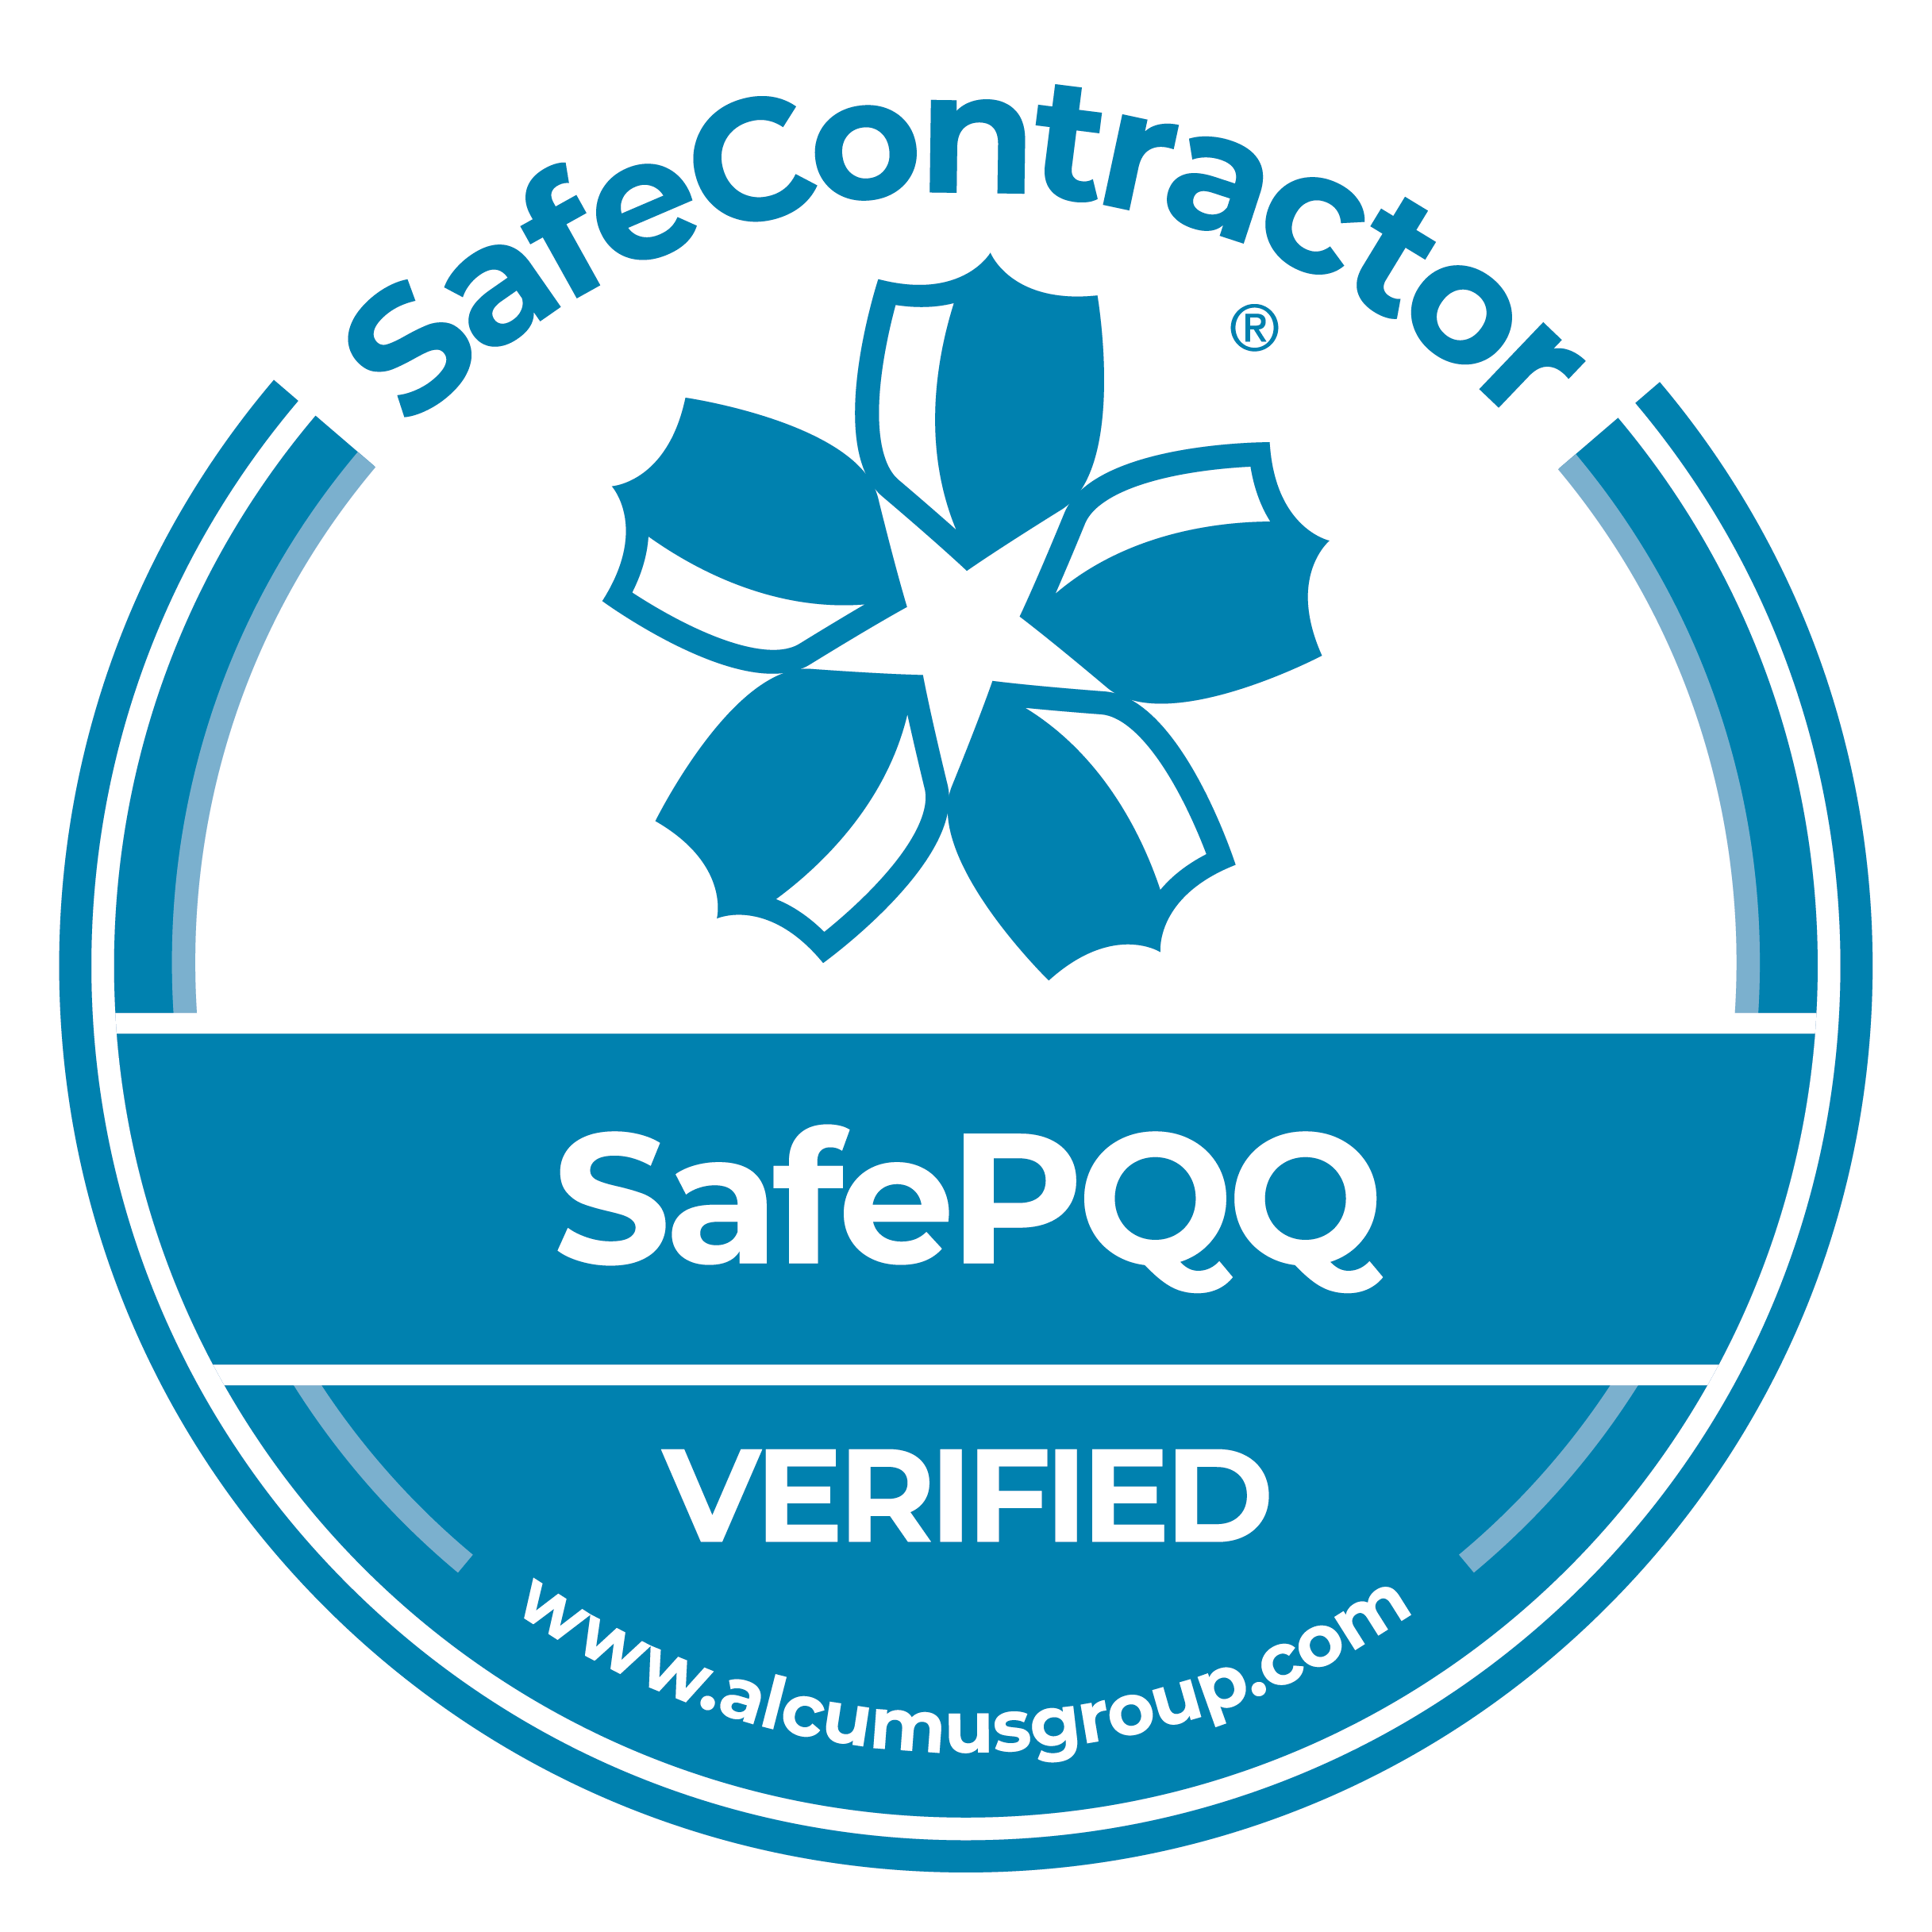 ERG’s SafePQQ Certificate of Verification